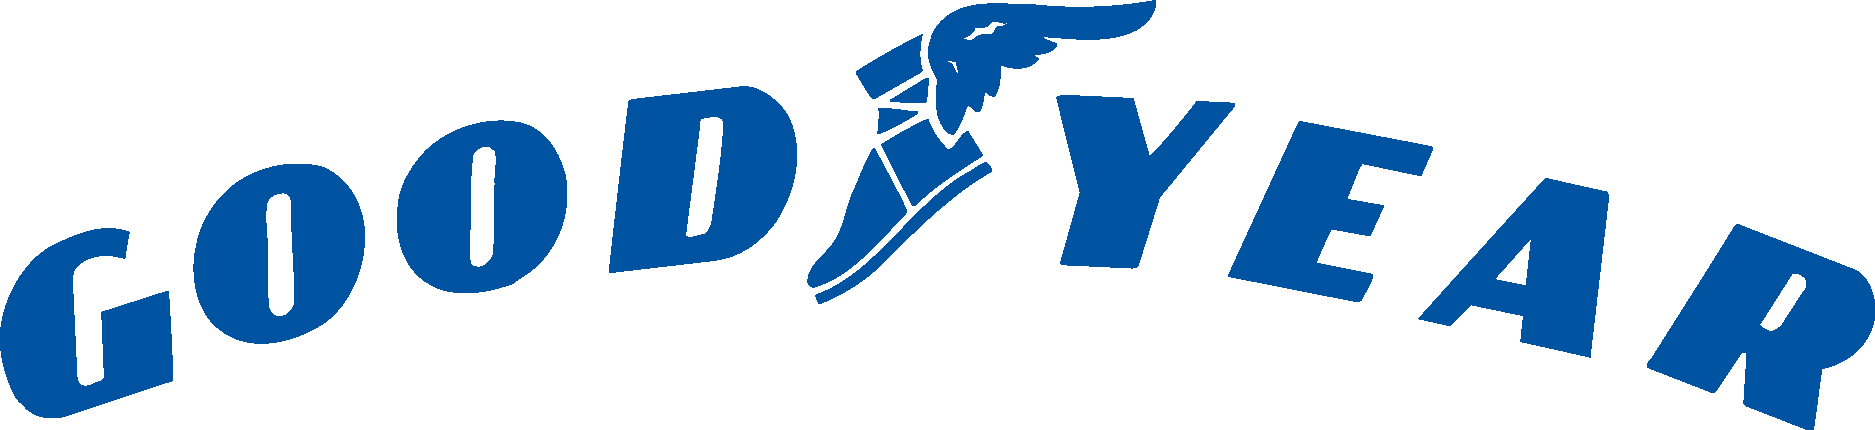 goodyear logo png